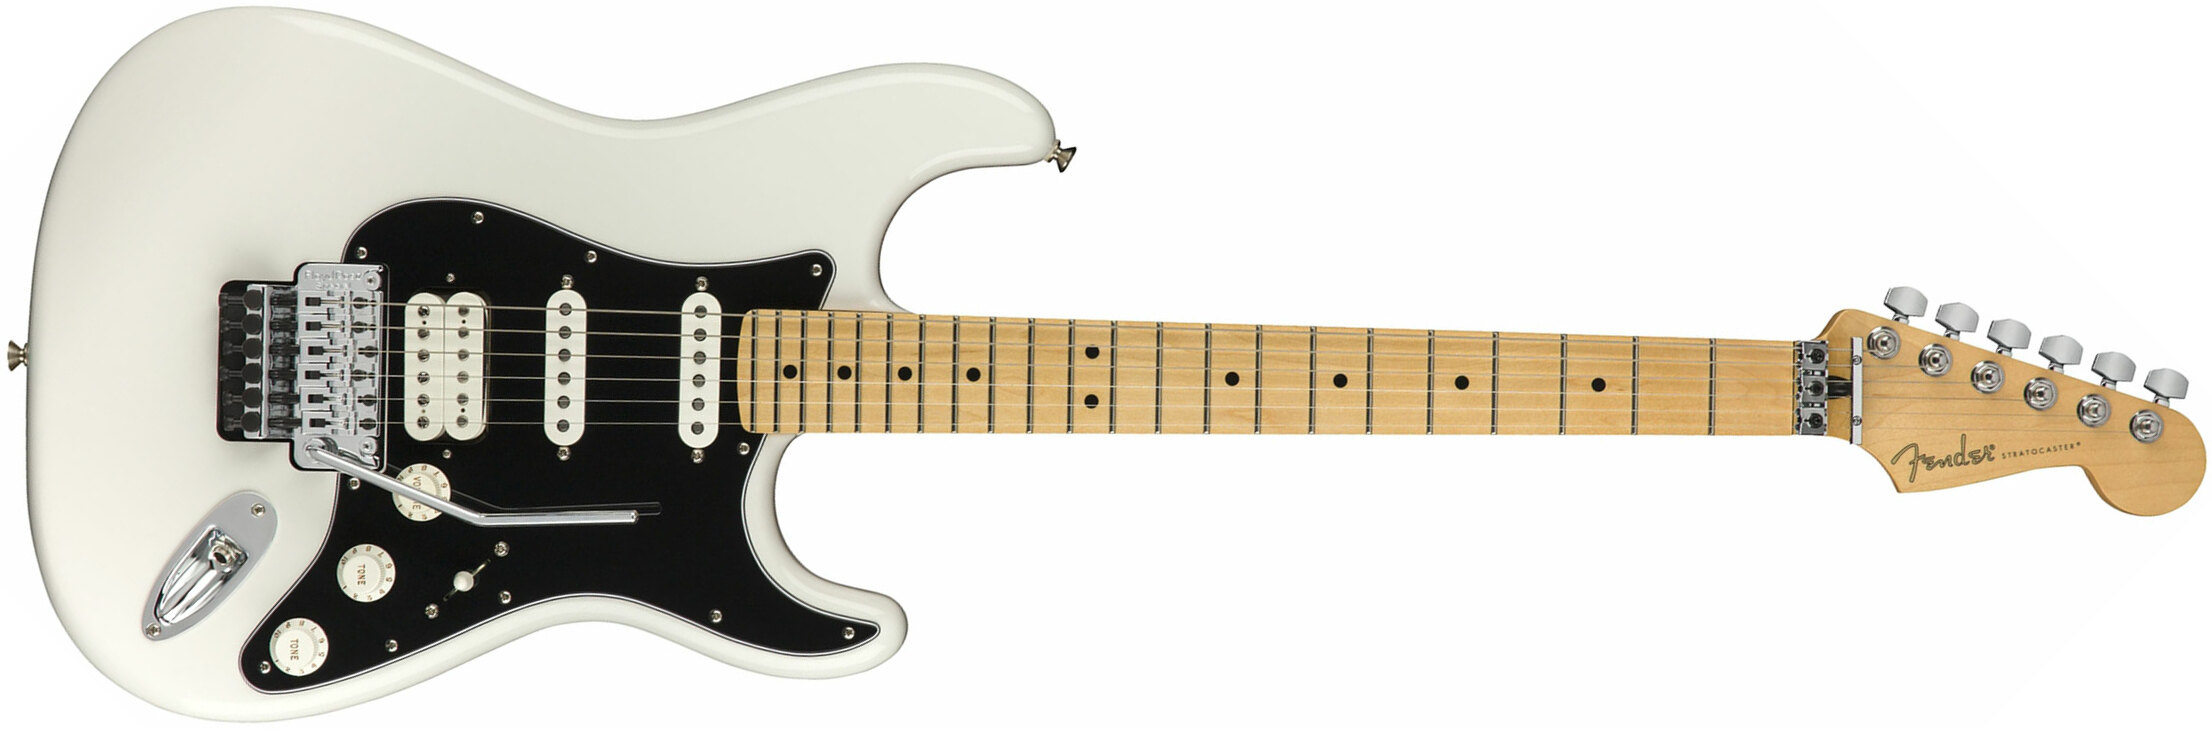 Fender Strat Player Floyd Rose Mex Hss Fr Mn - Polar White - Guitarra eléctrica con forma de str. - Main picture